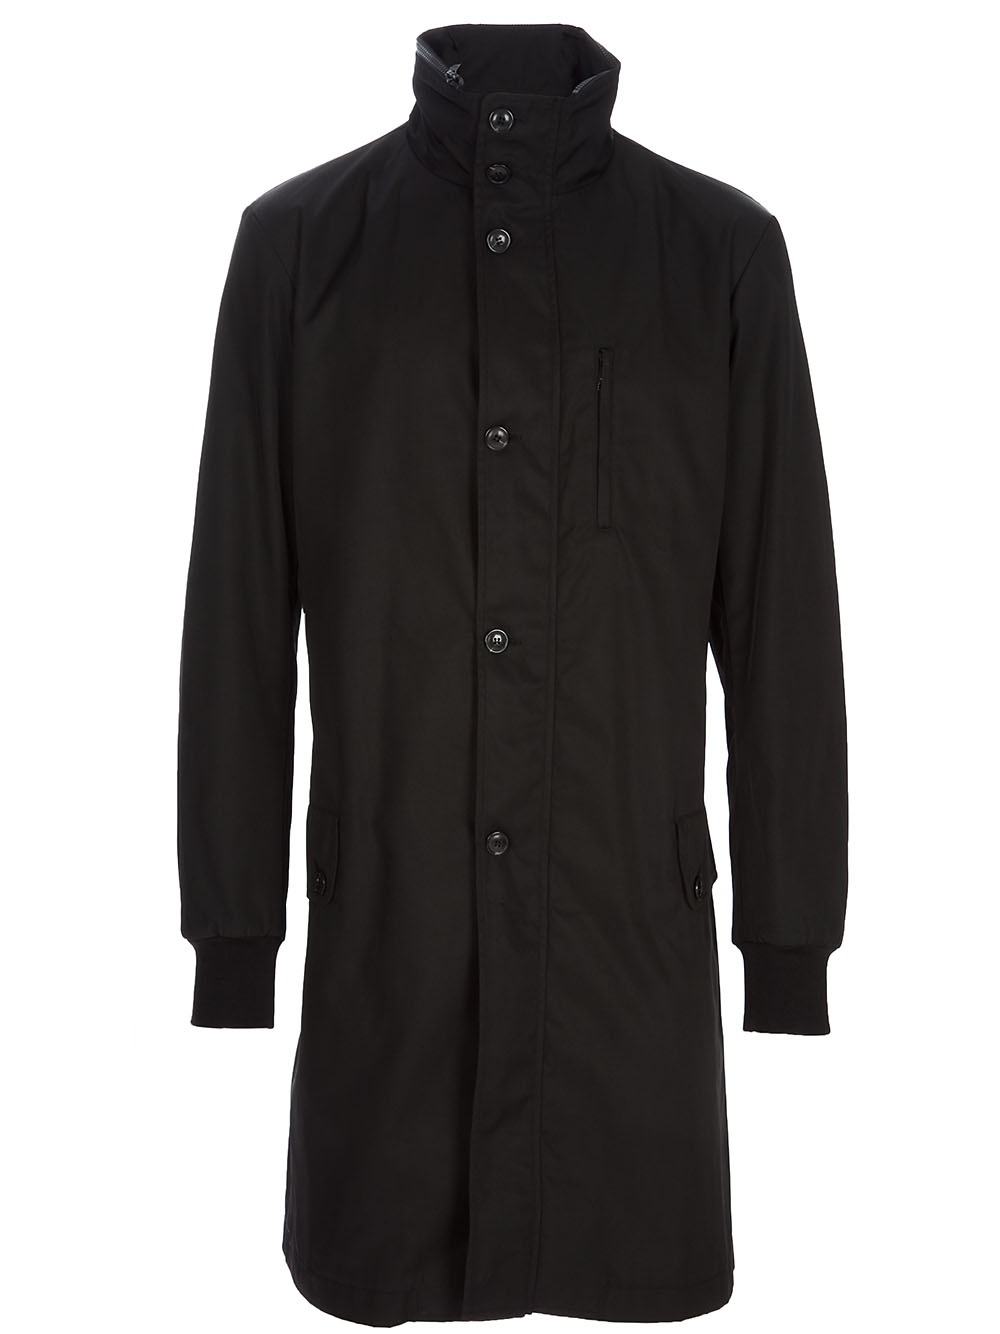 Y-3 Trench Coat in Black for Men | Lyst